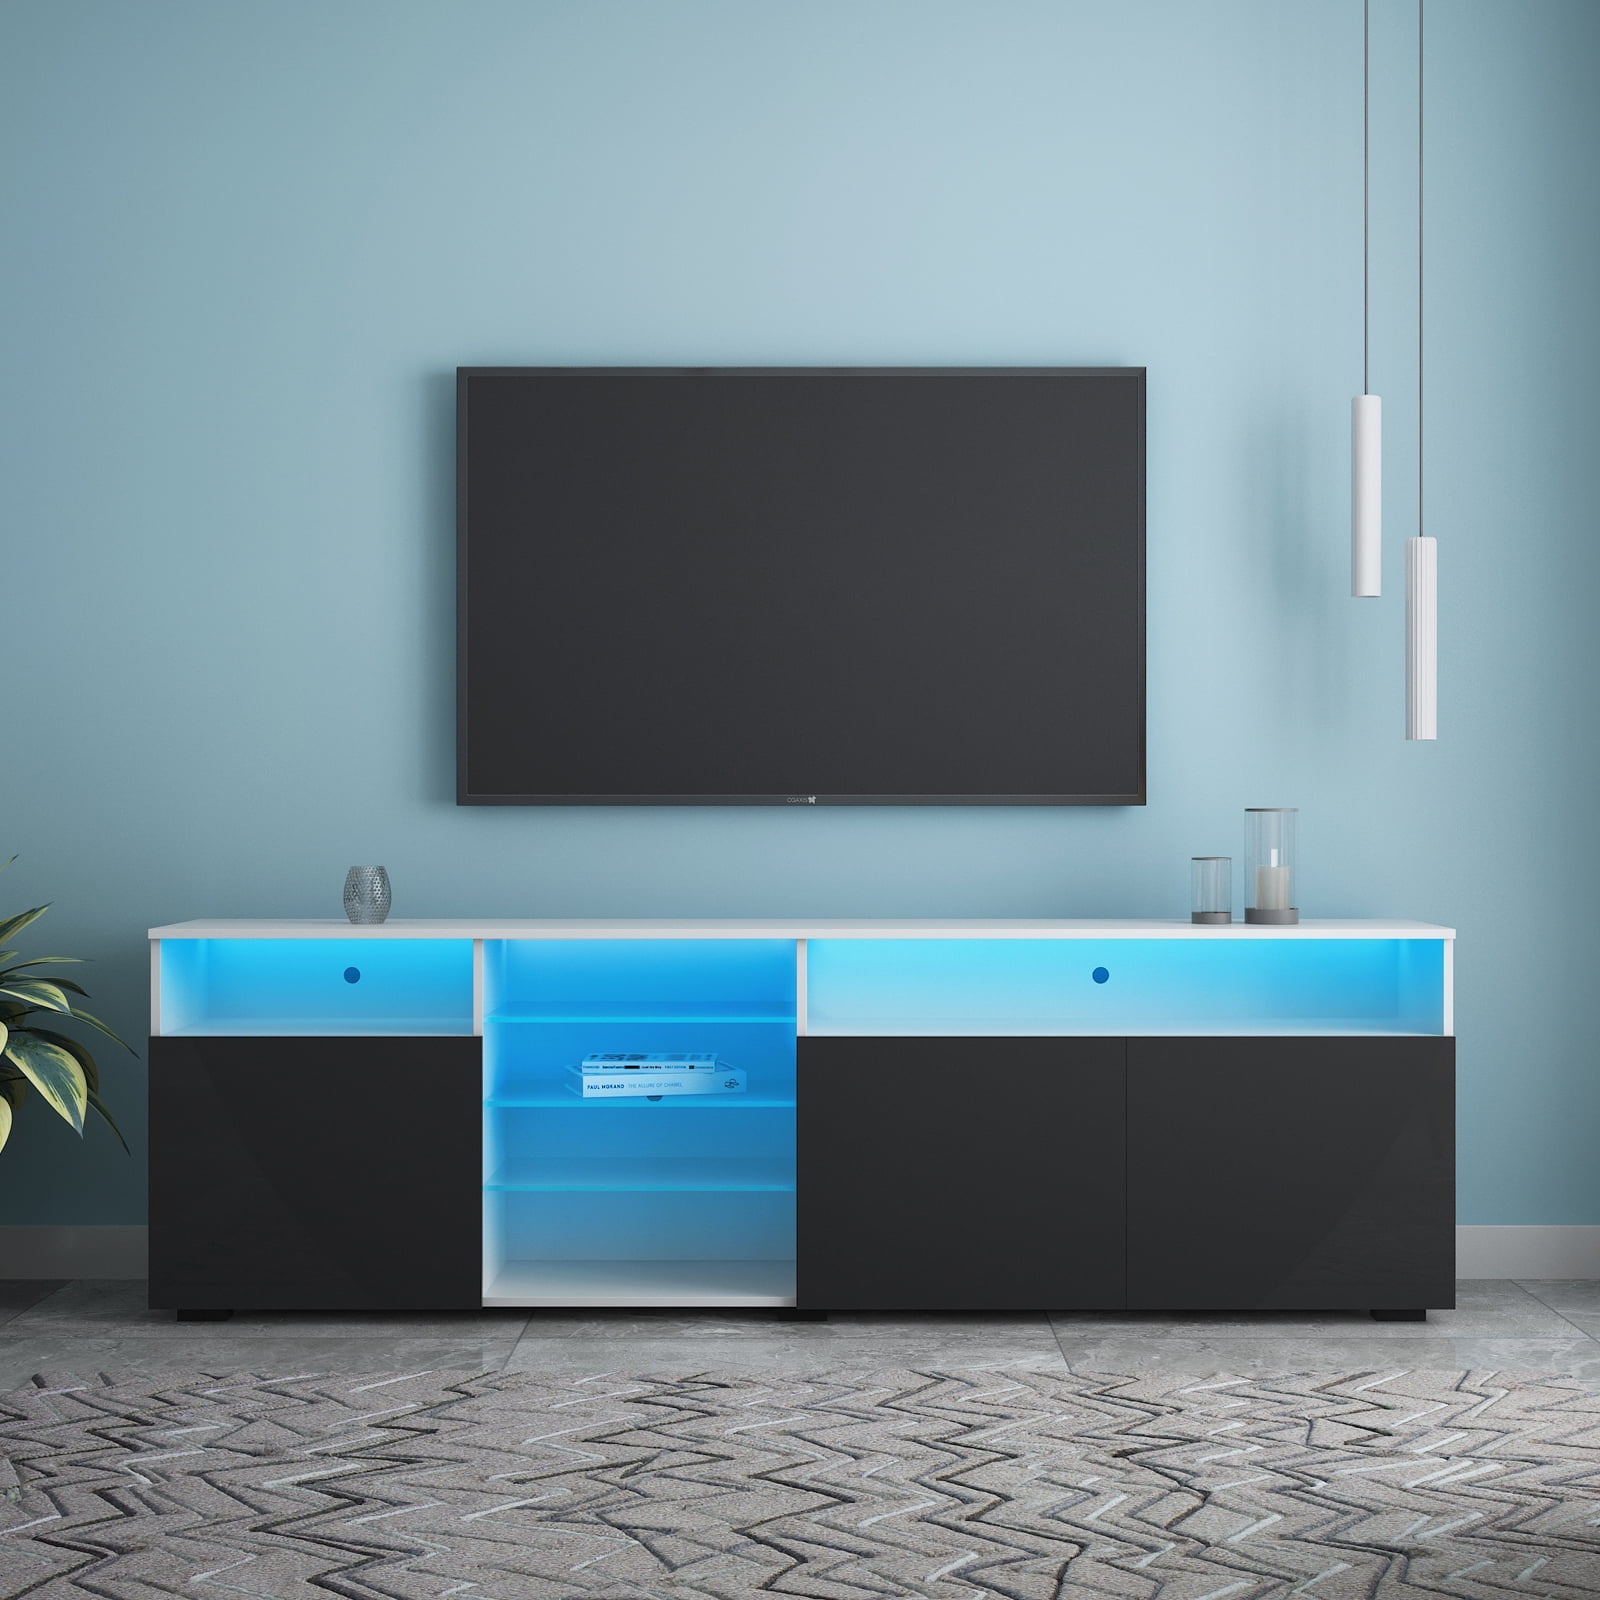 200cm TV Stand Cabinet Wood Entertainment Unit Storage White/Black w/RGB LED 